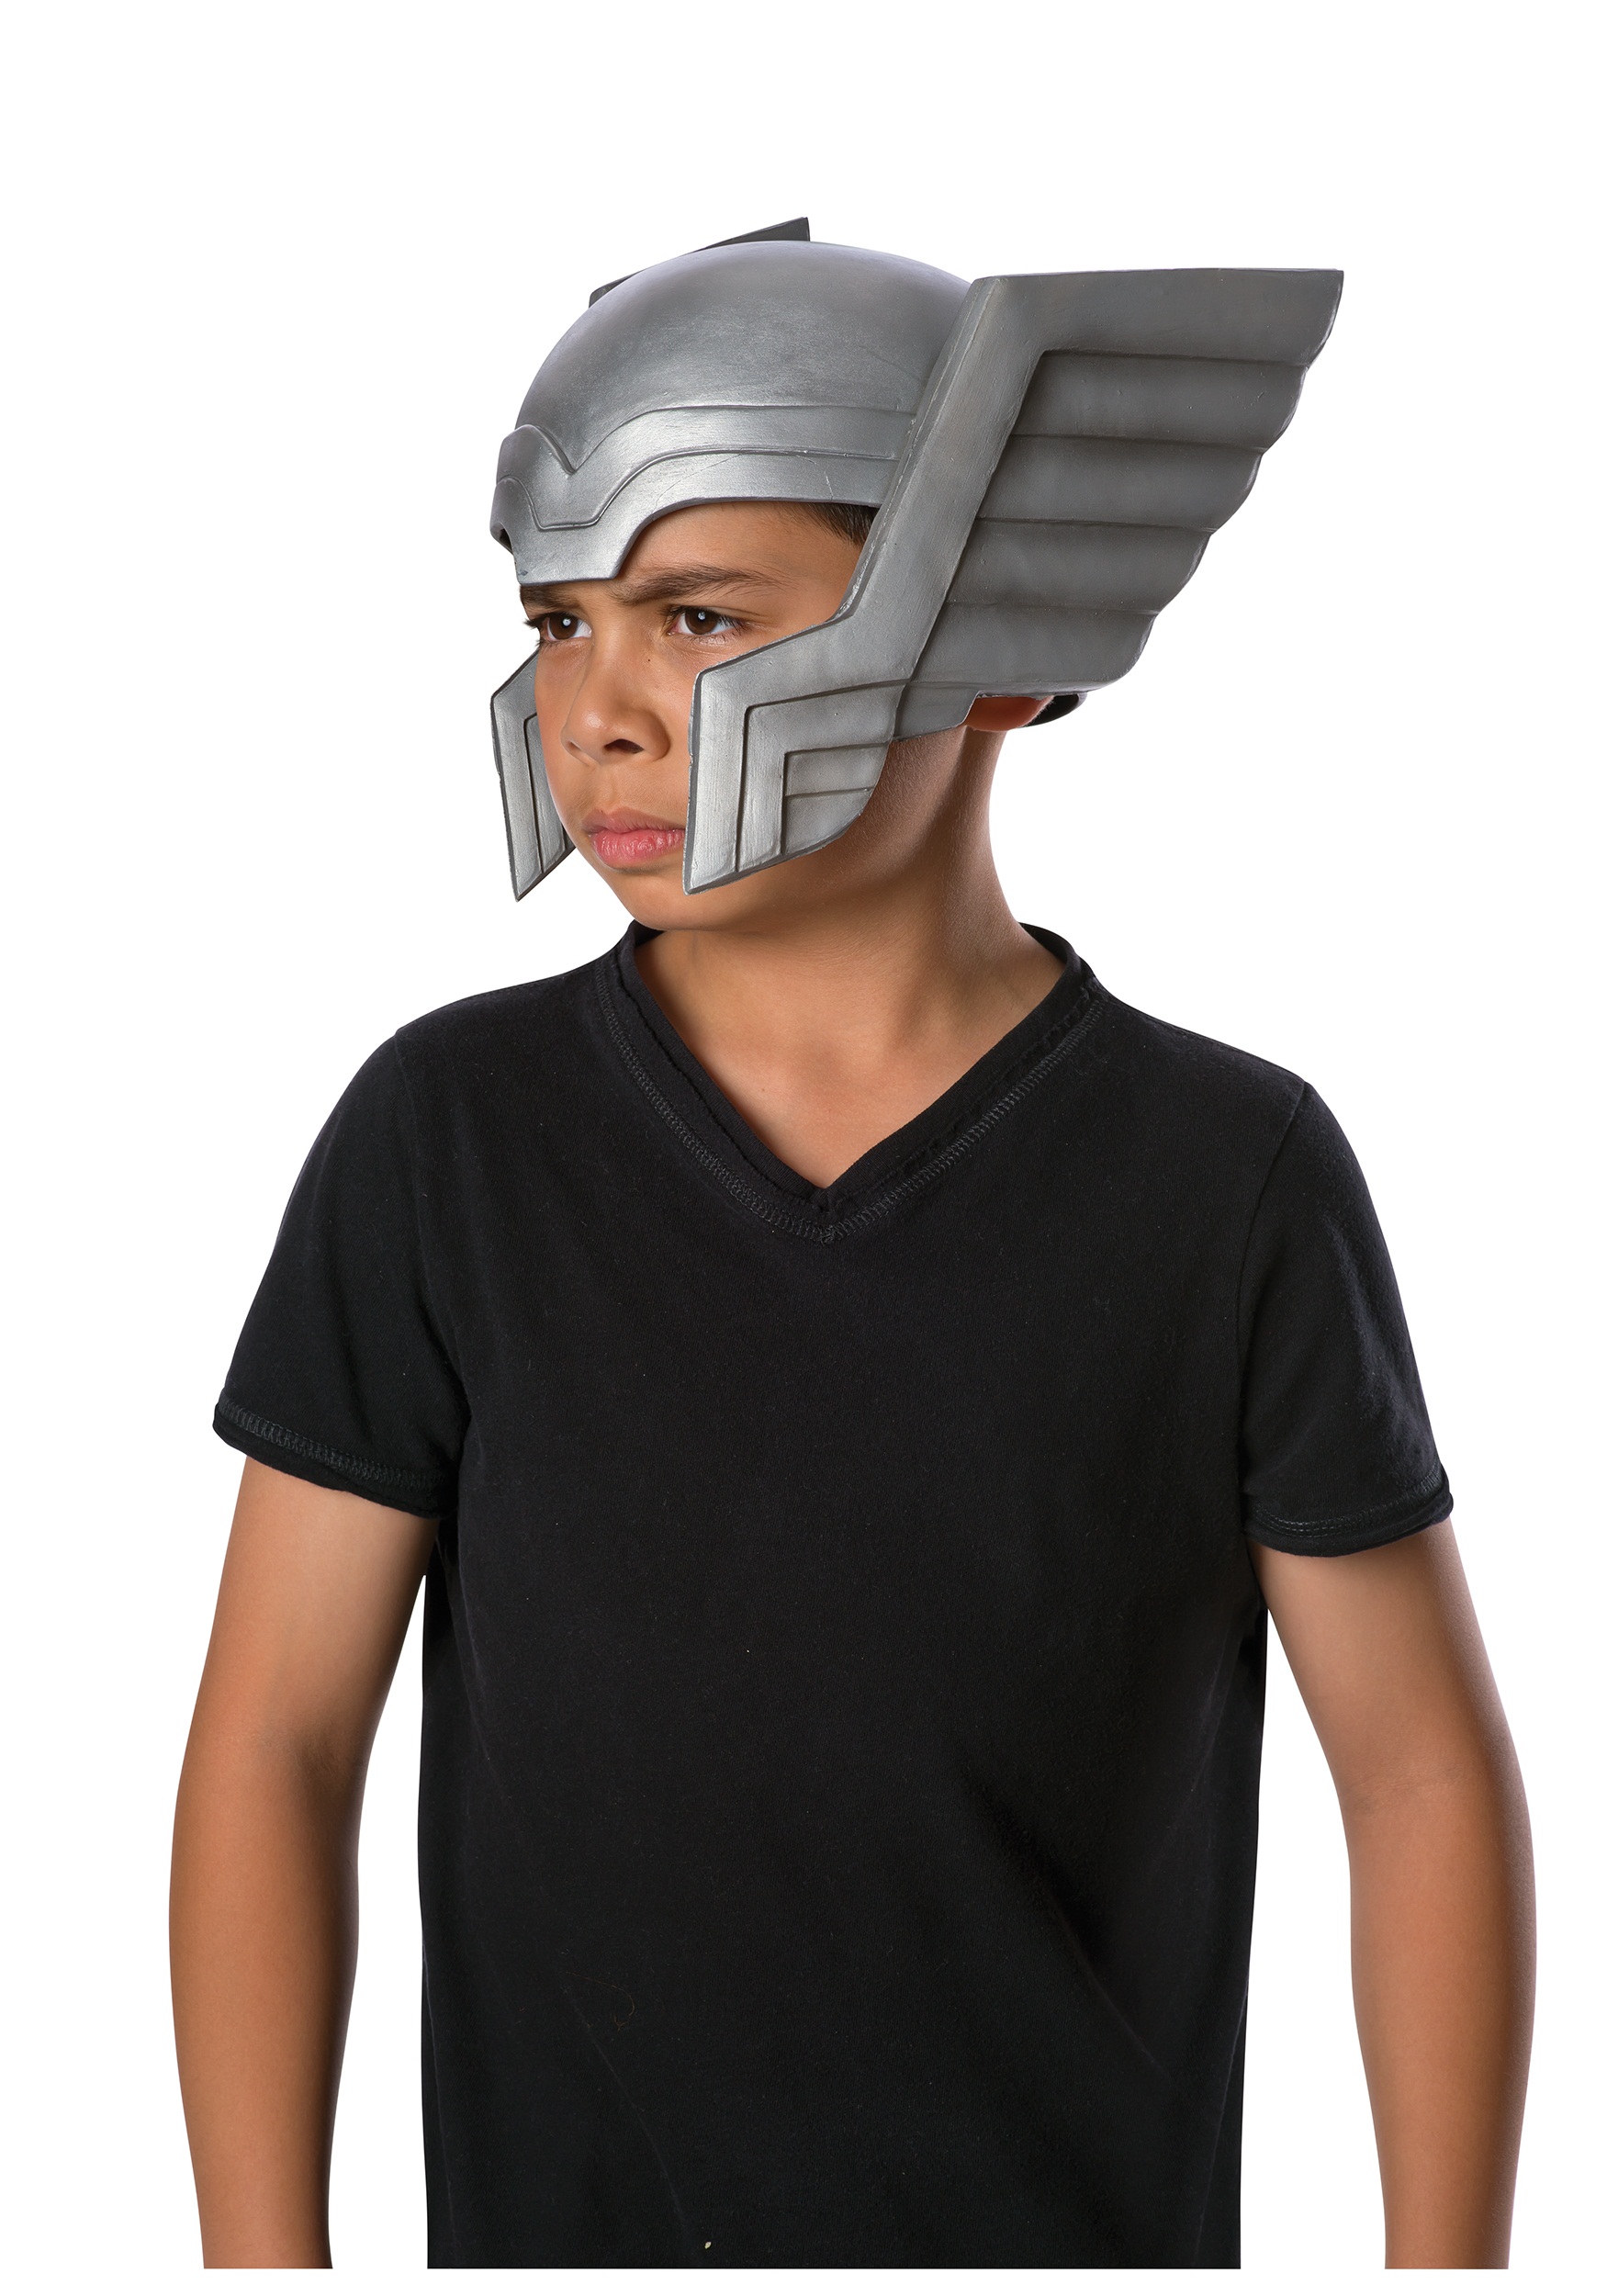 Thor Child Helmet